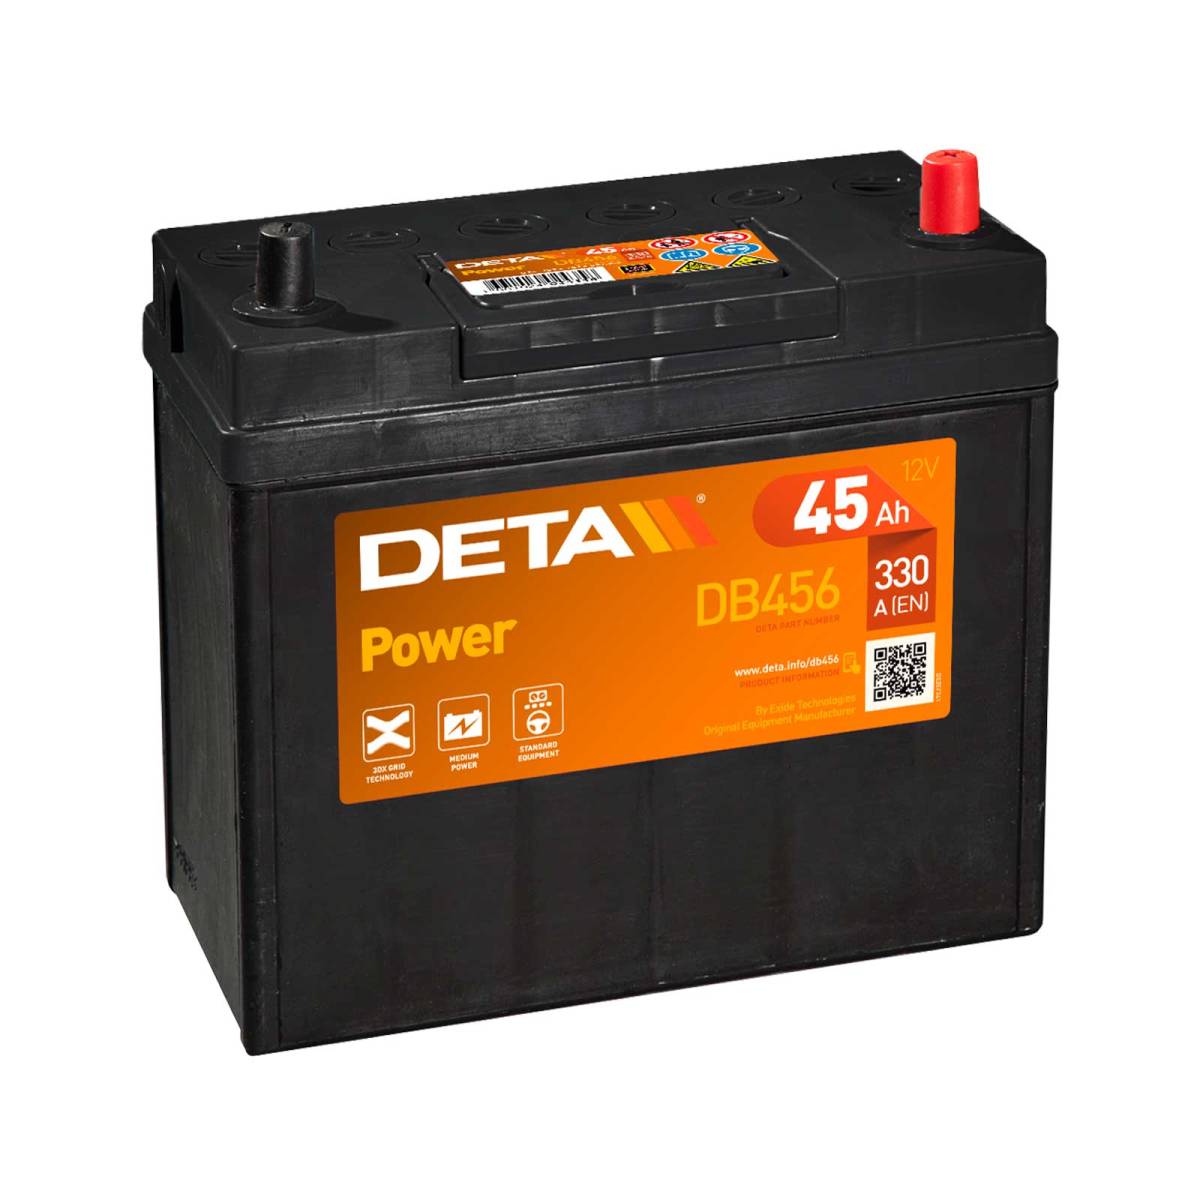 DETA DB456 Power 12V 45Ah 330A Autobatterie online bestellen